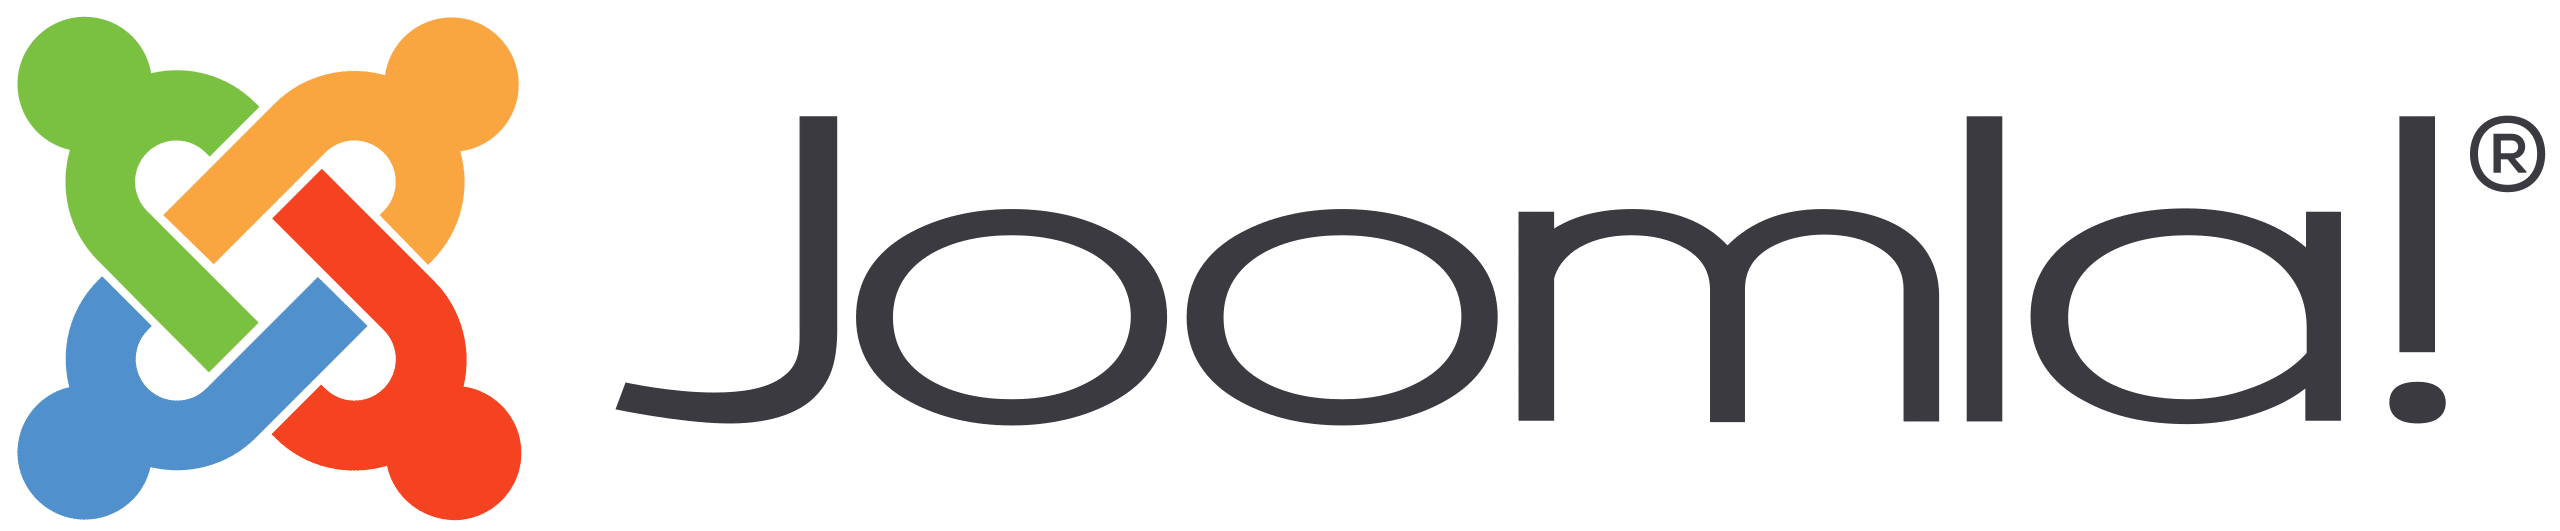 Joomla Website Design Services by Paces Creative